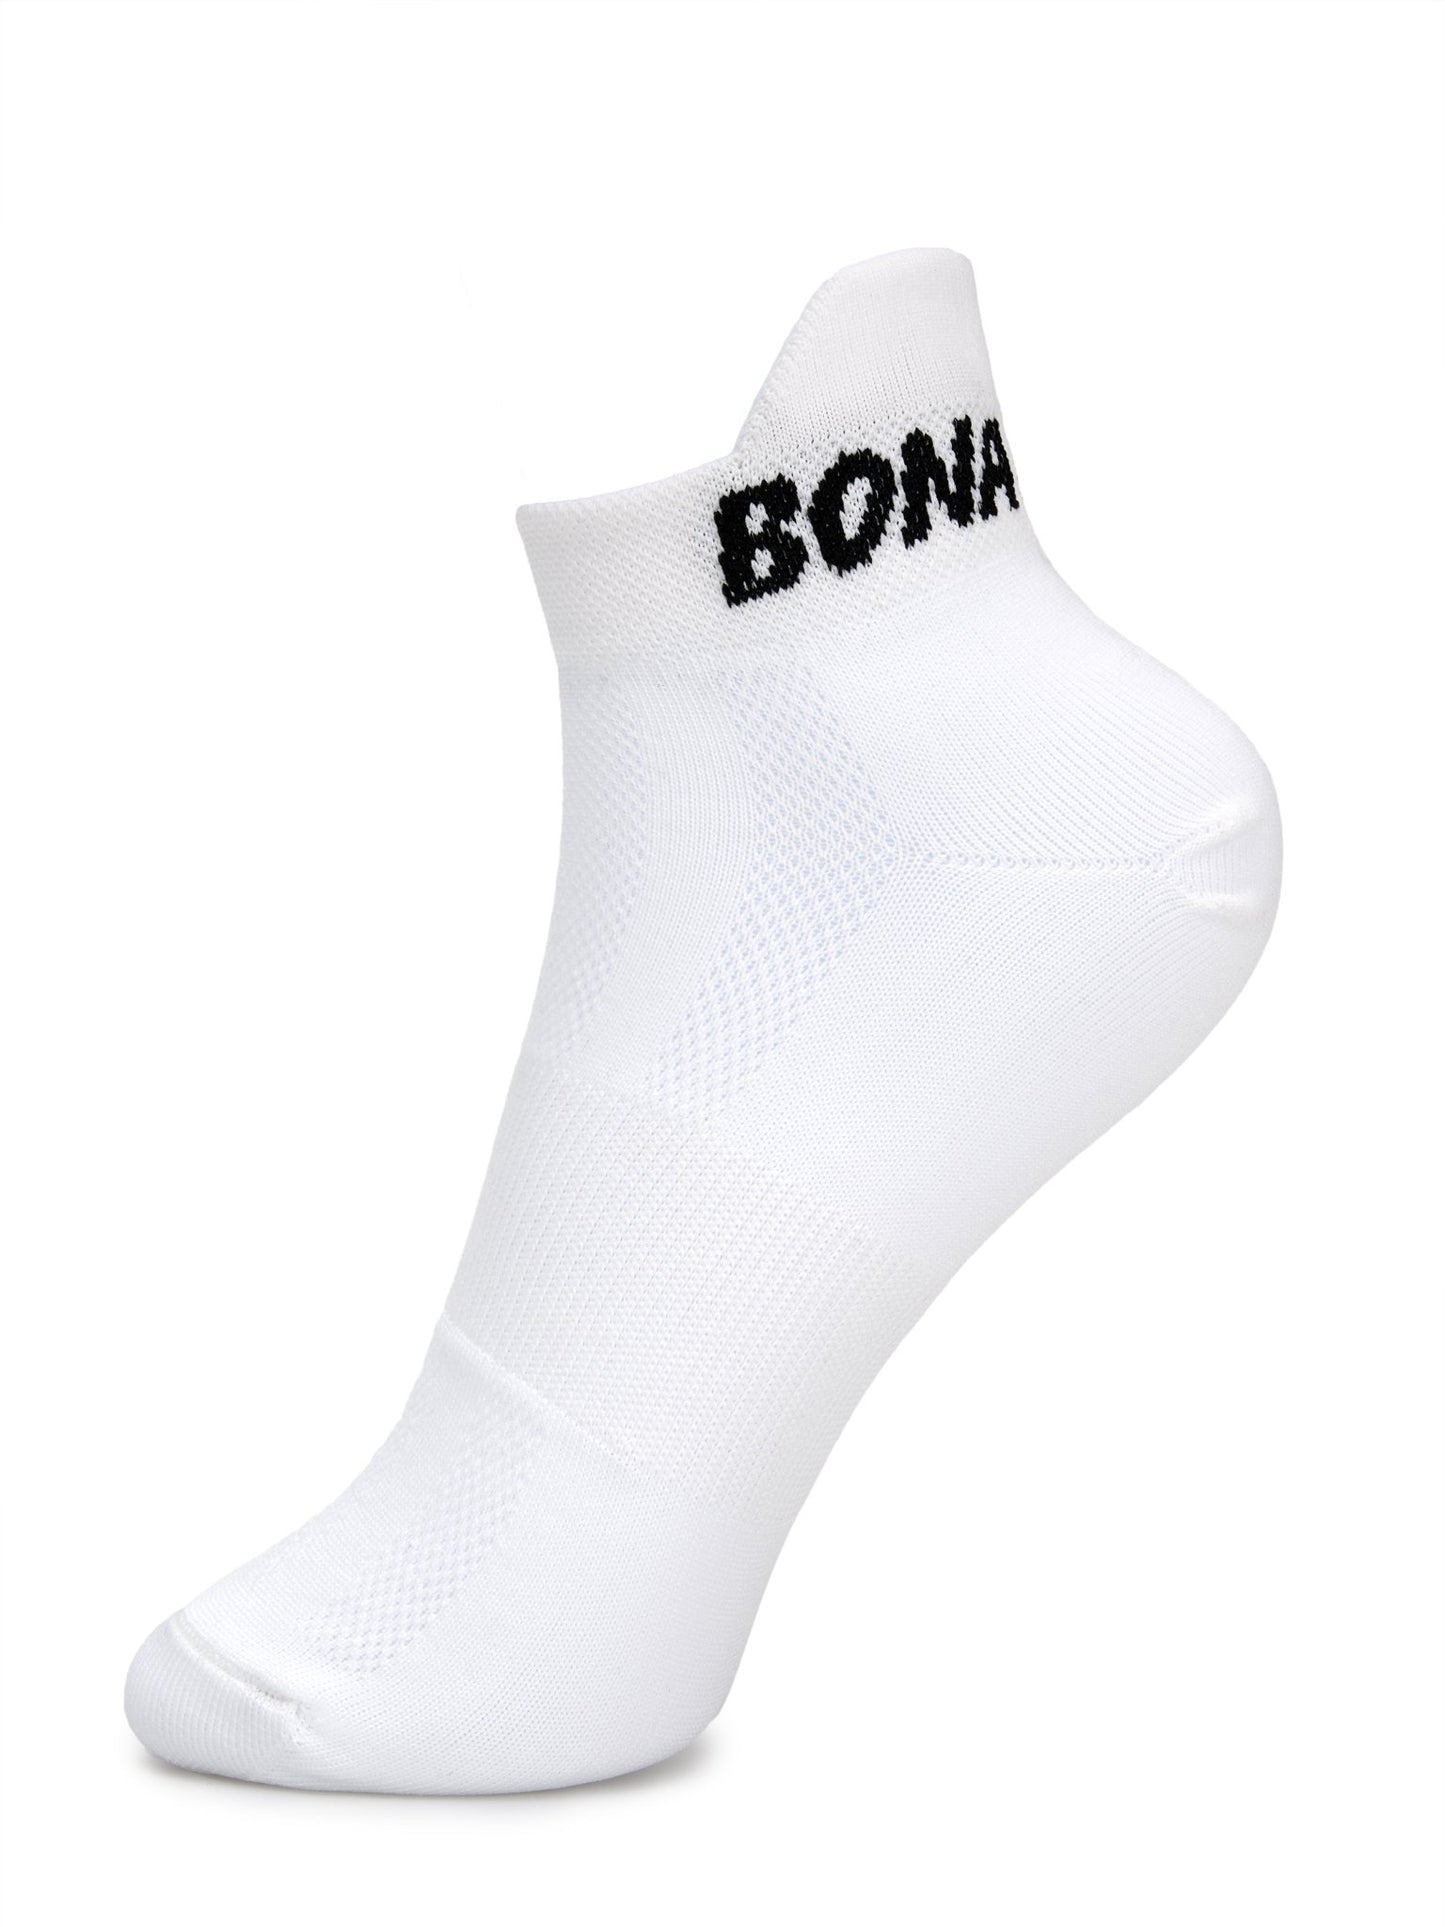 Socks White (3 pairs) - Bona Fide